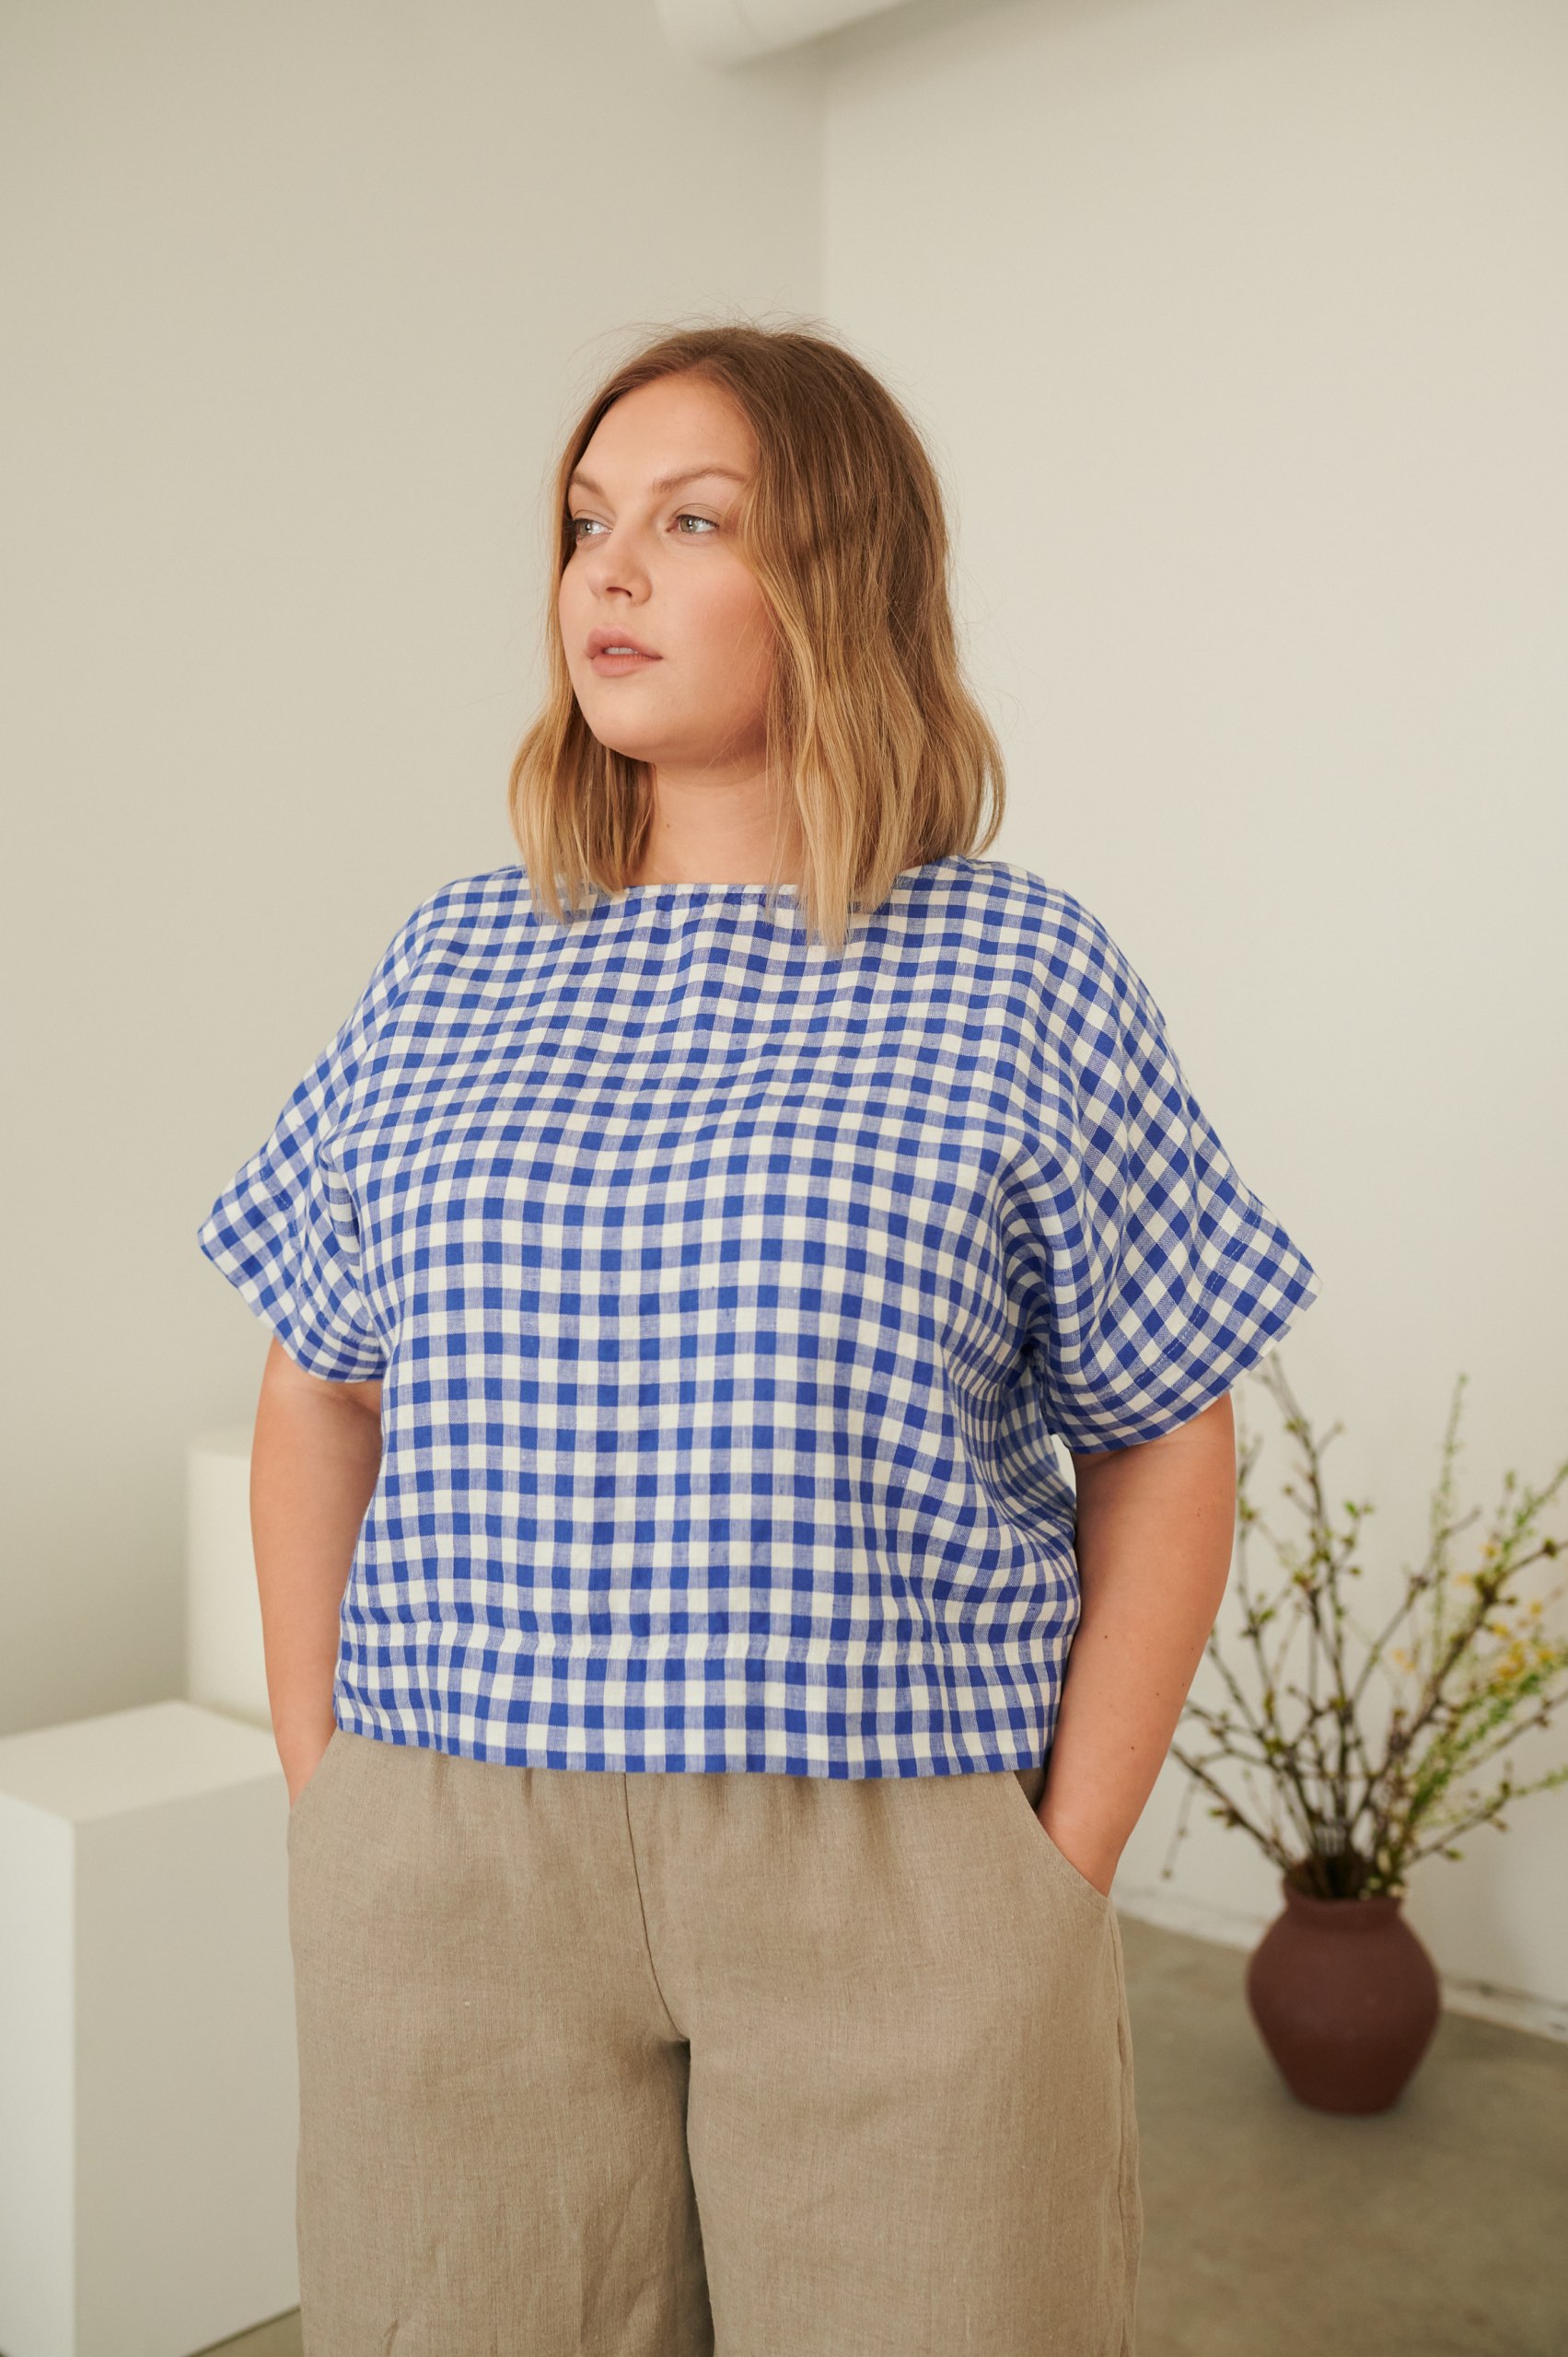 Linenfox model in short sleeve cropped blue gingham linen top